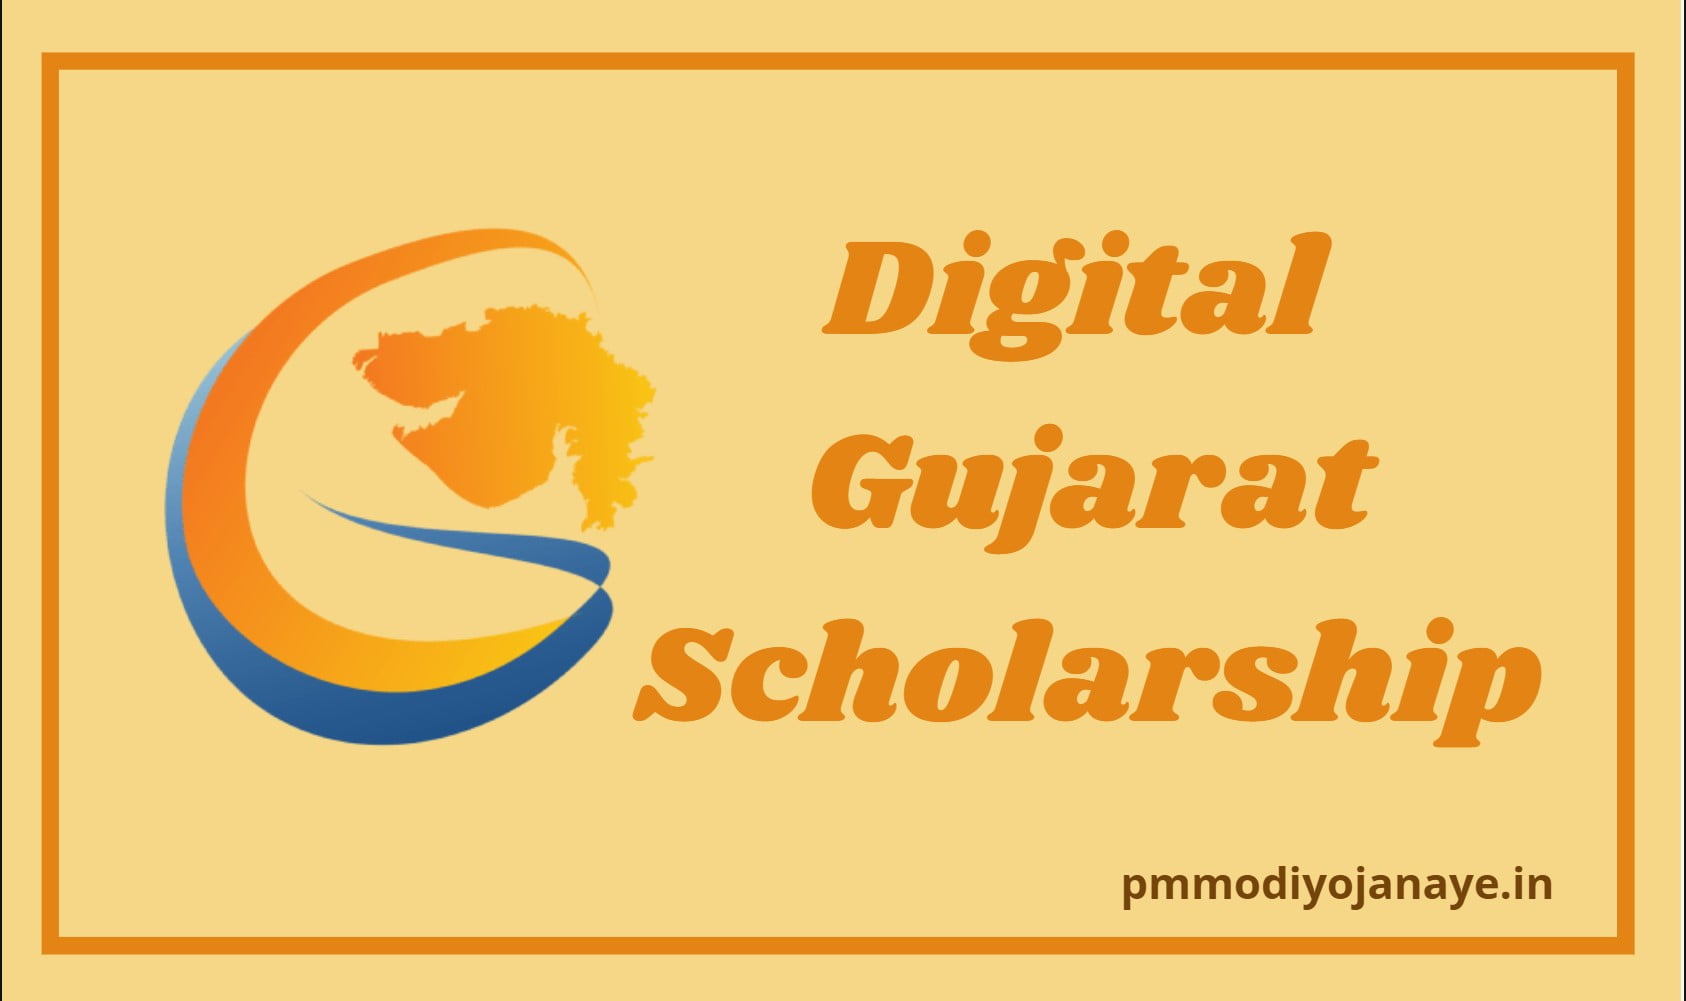 [Apply] Digital Gujarat Scholarship 2021 Online, Eligibility & Status, Dates